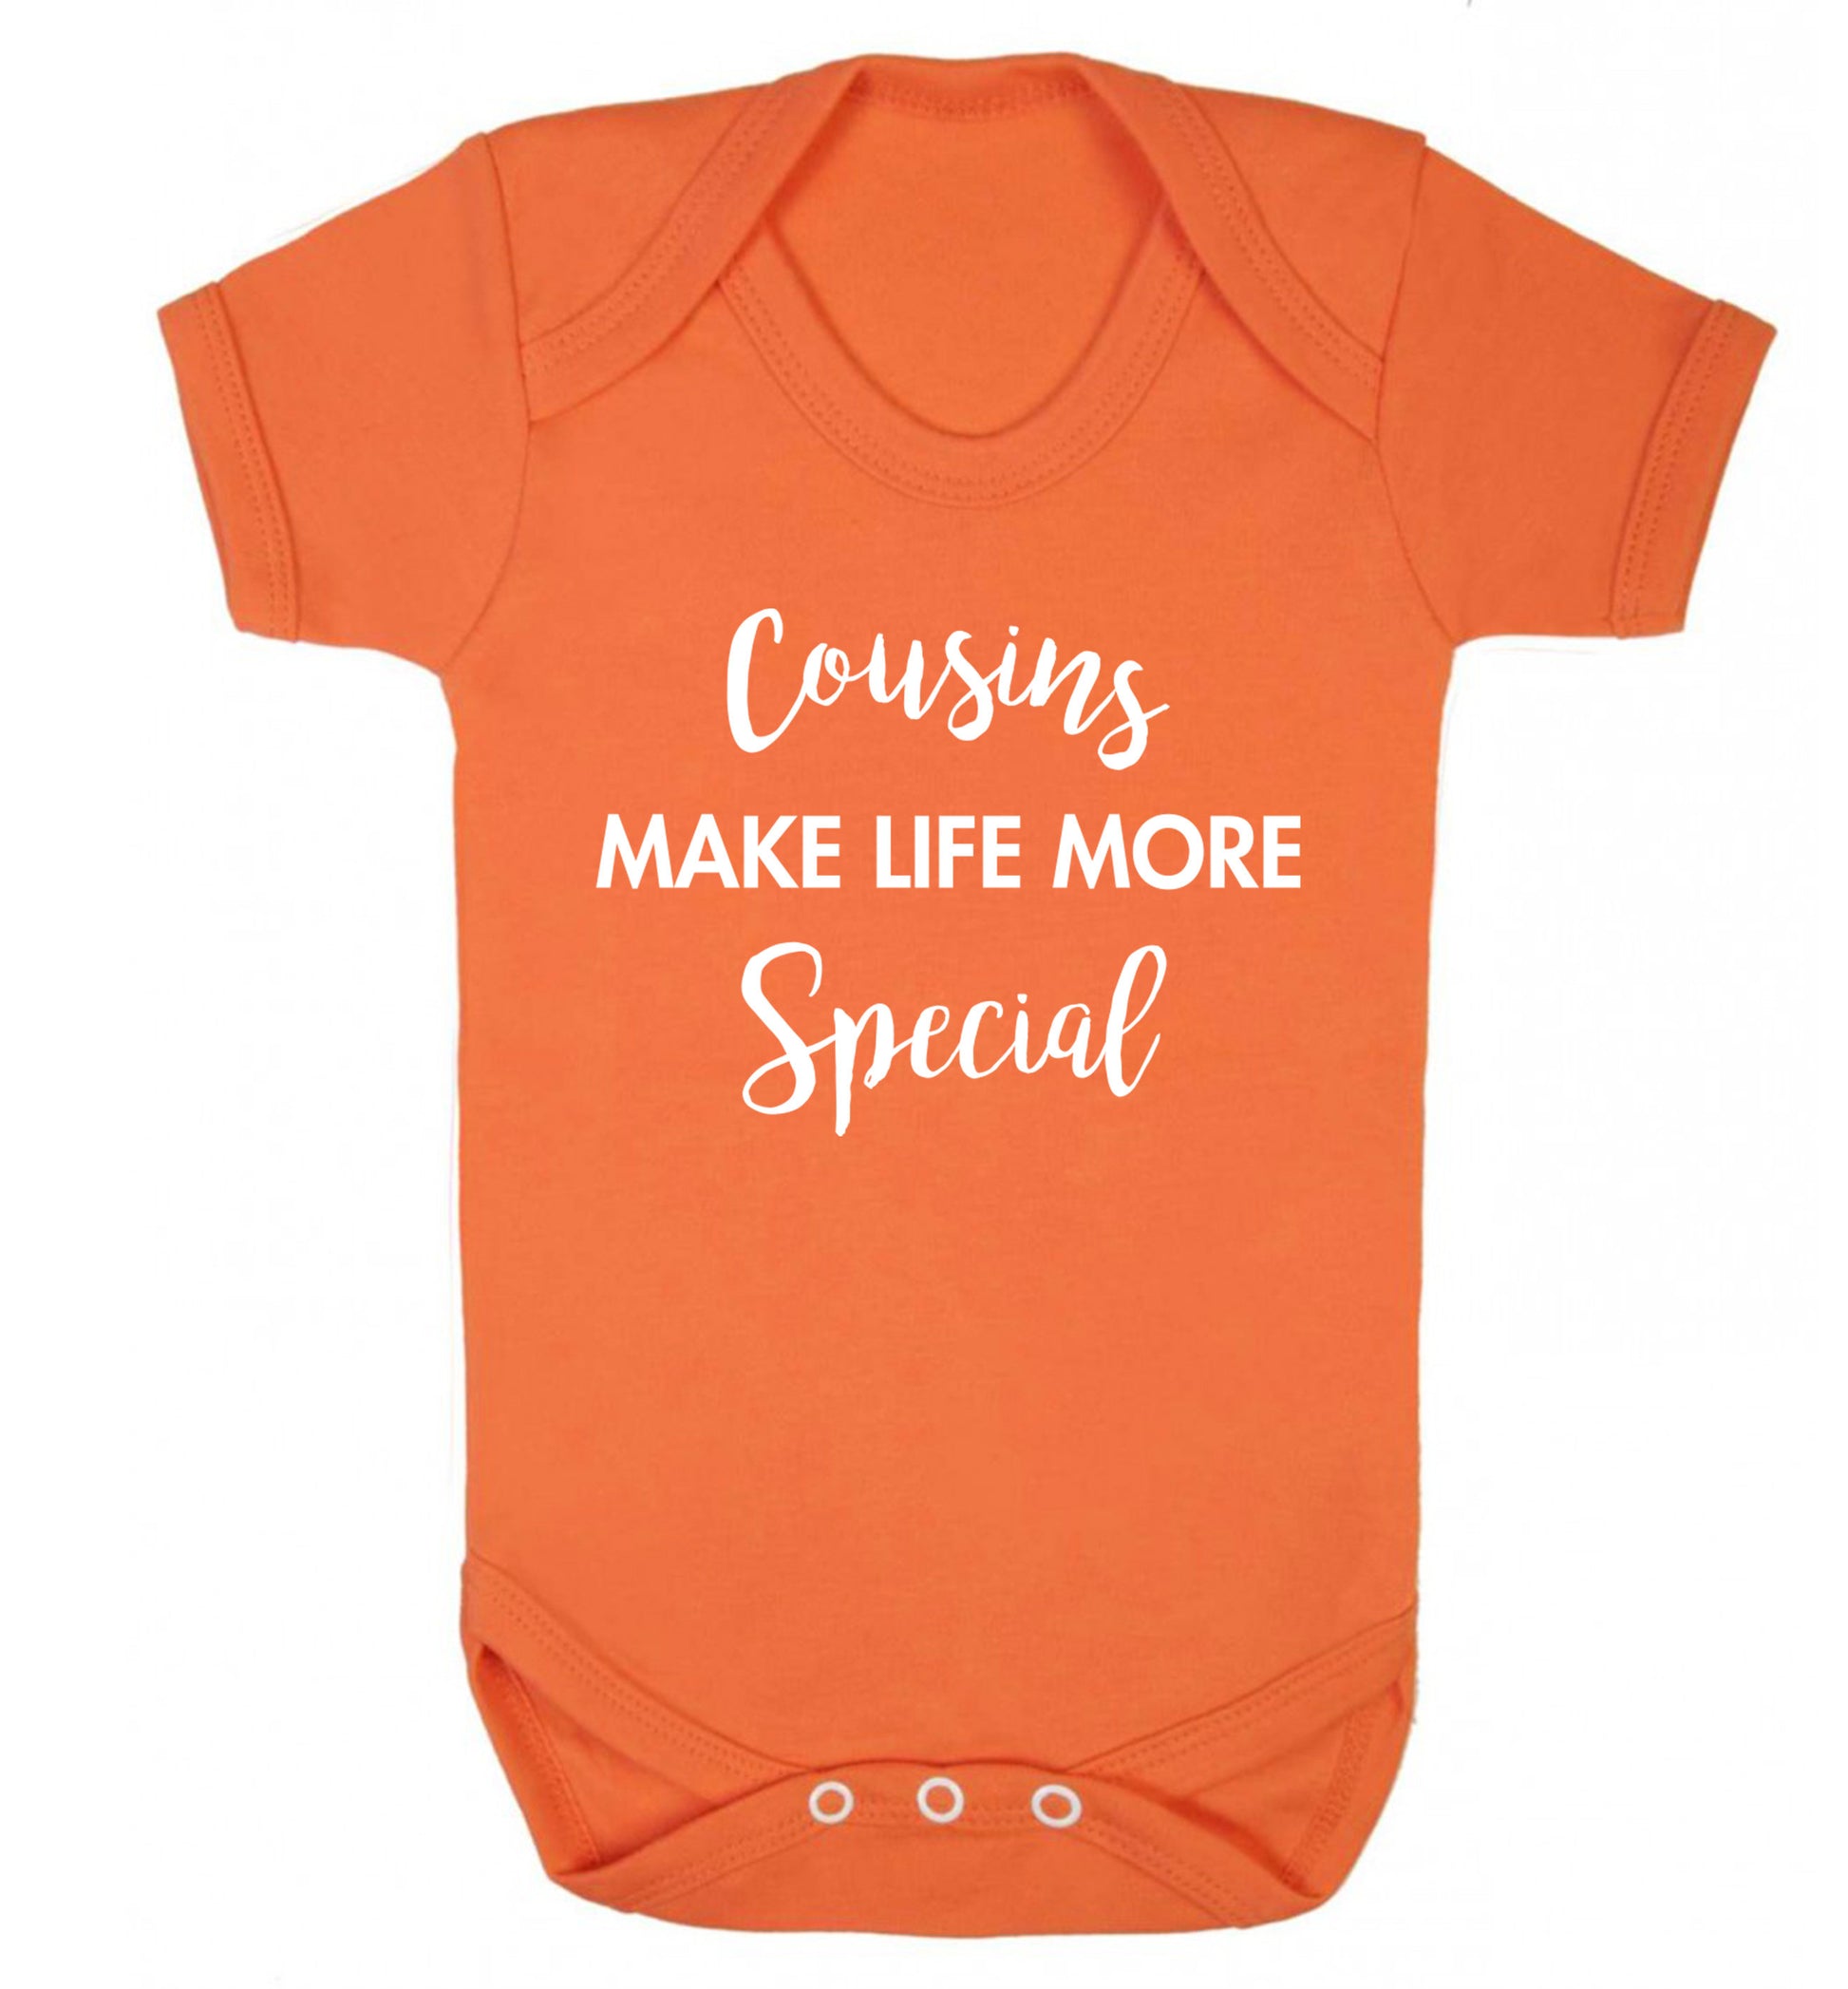 Cousins make life more special Baby Vest orange 18-24 months